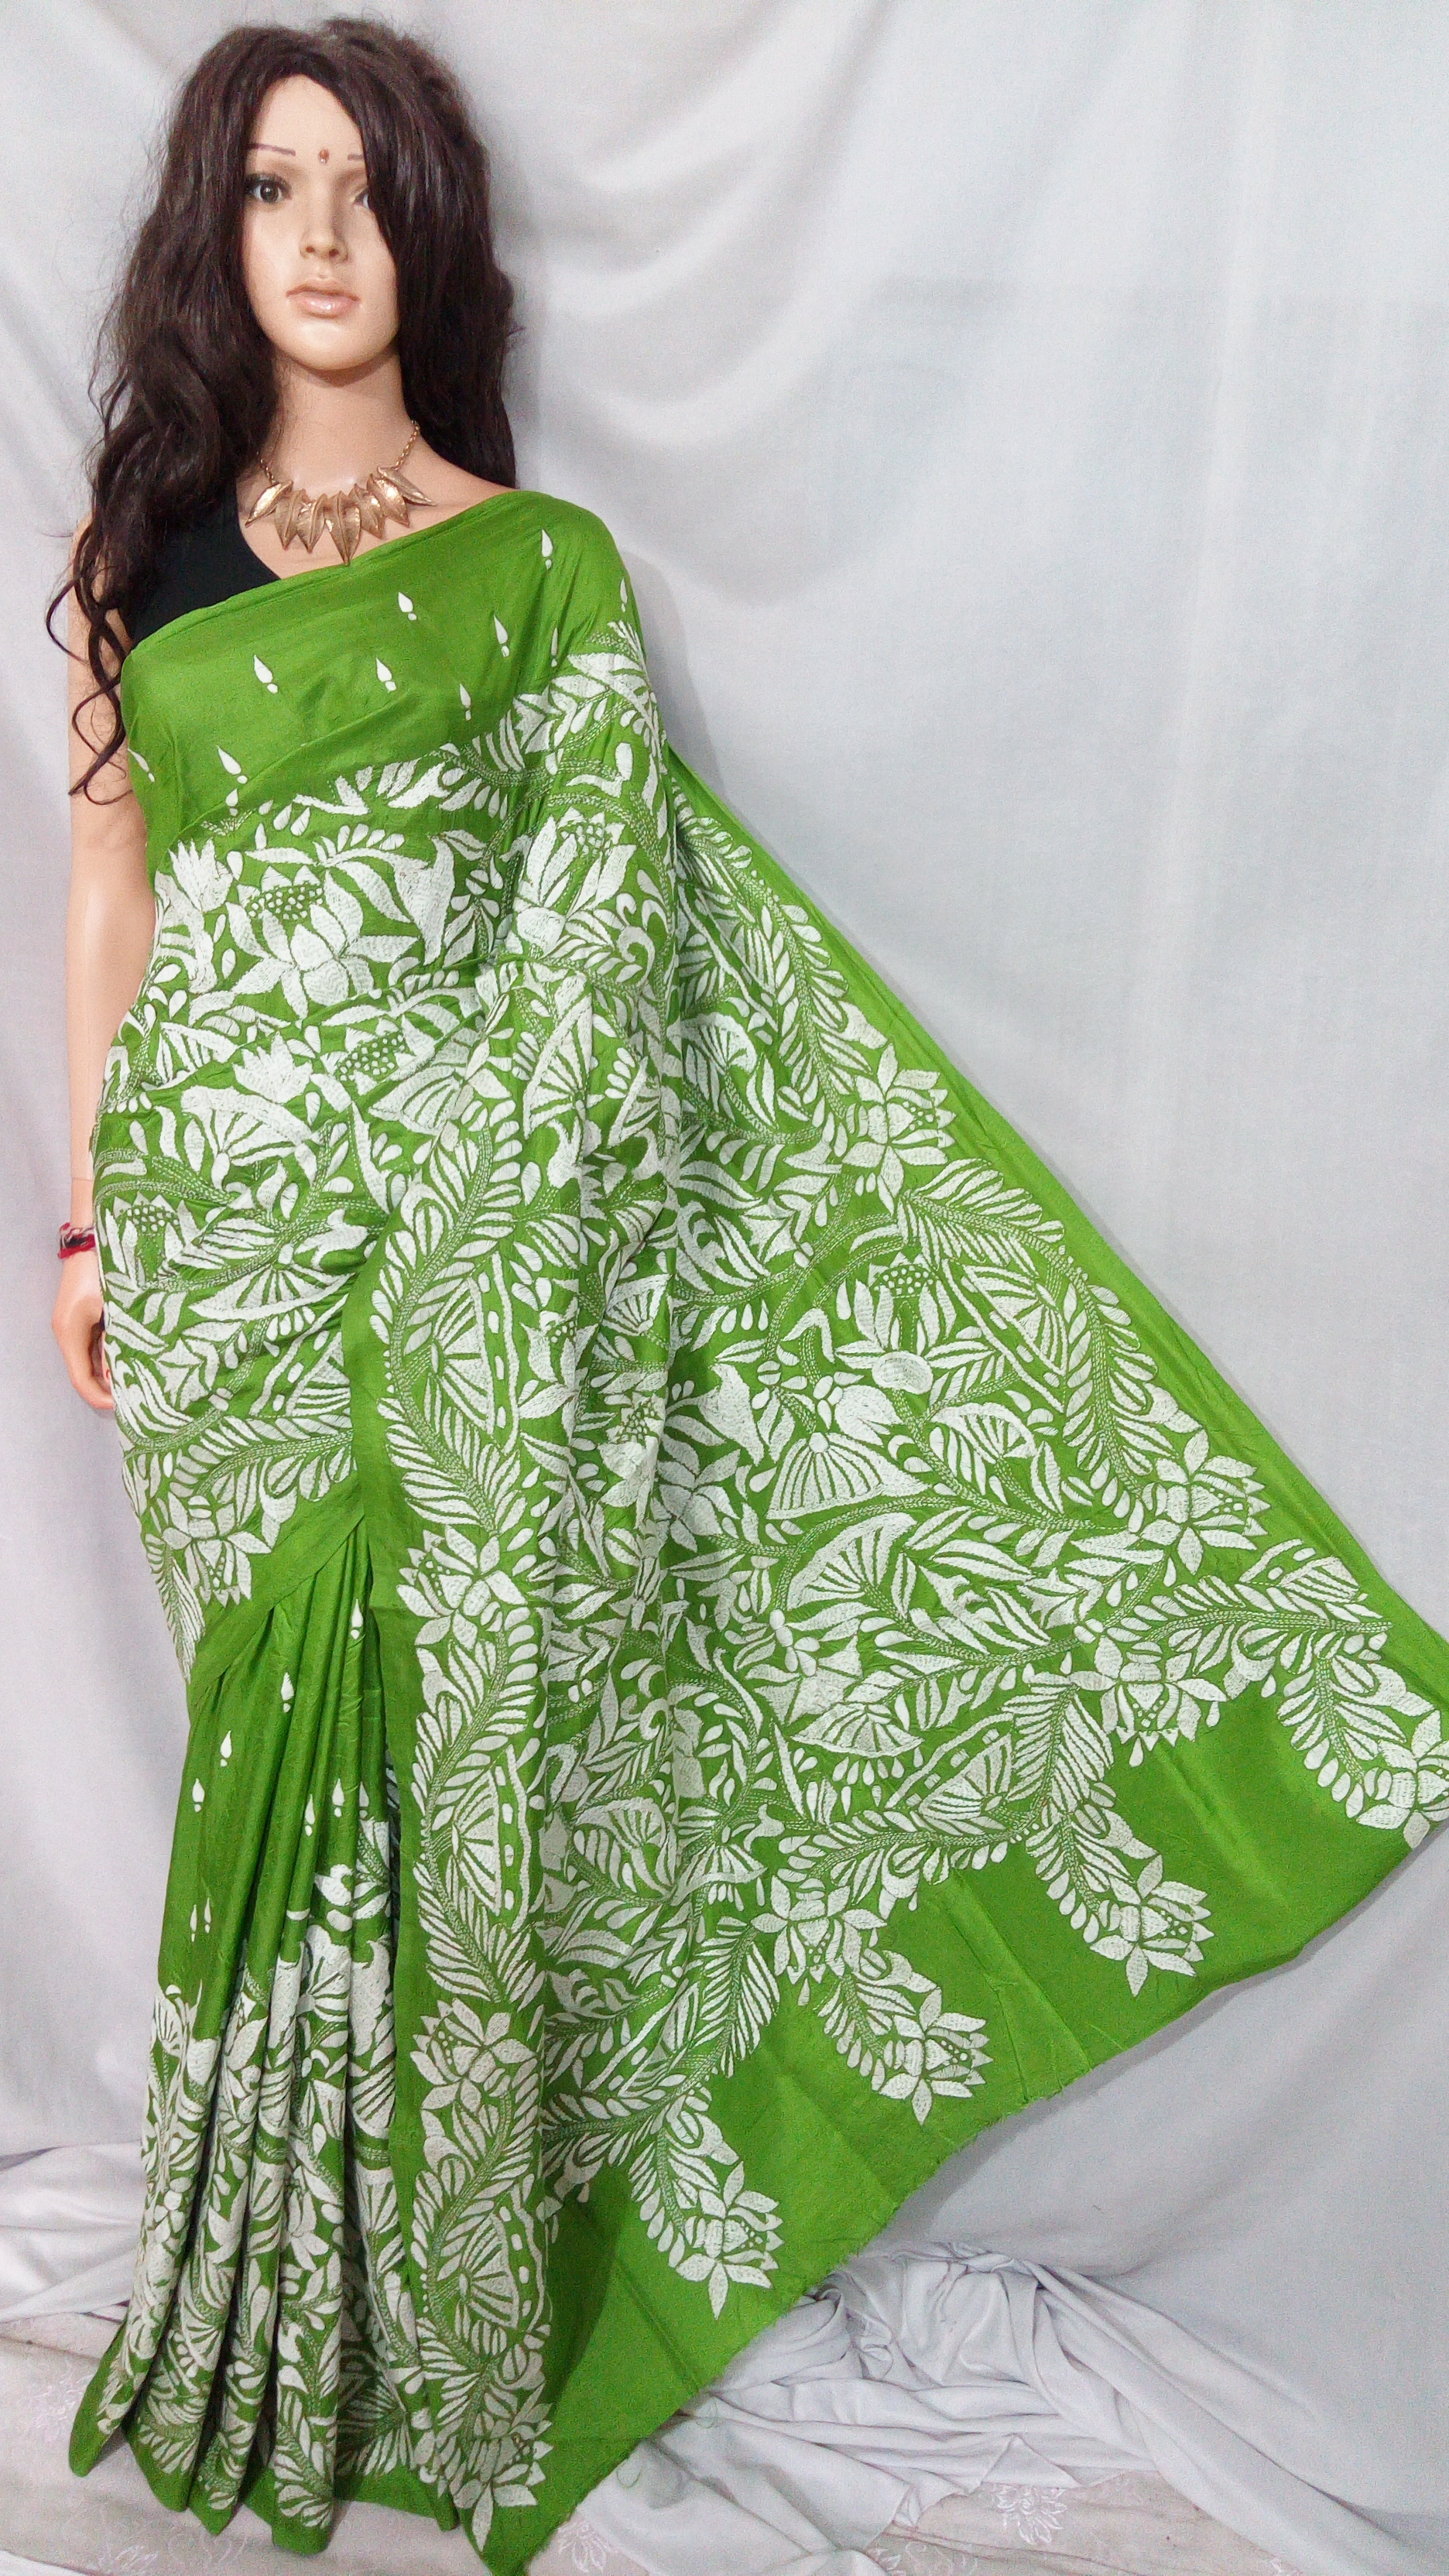 Banglore Silk Katha Stitch Saree